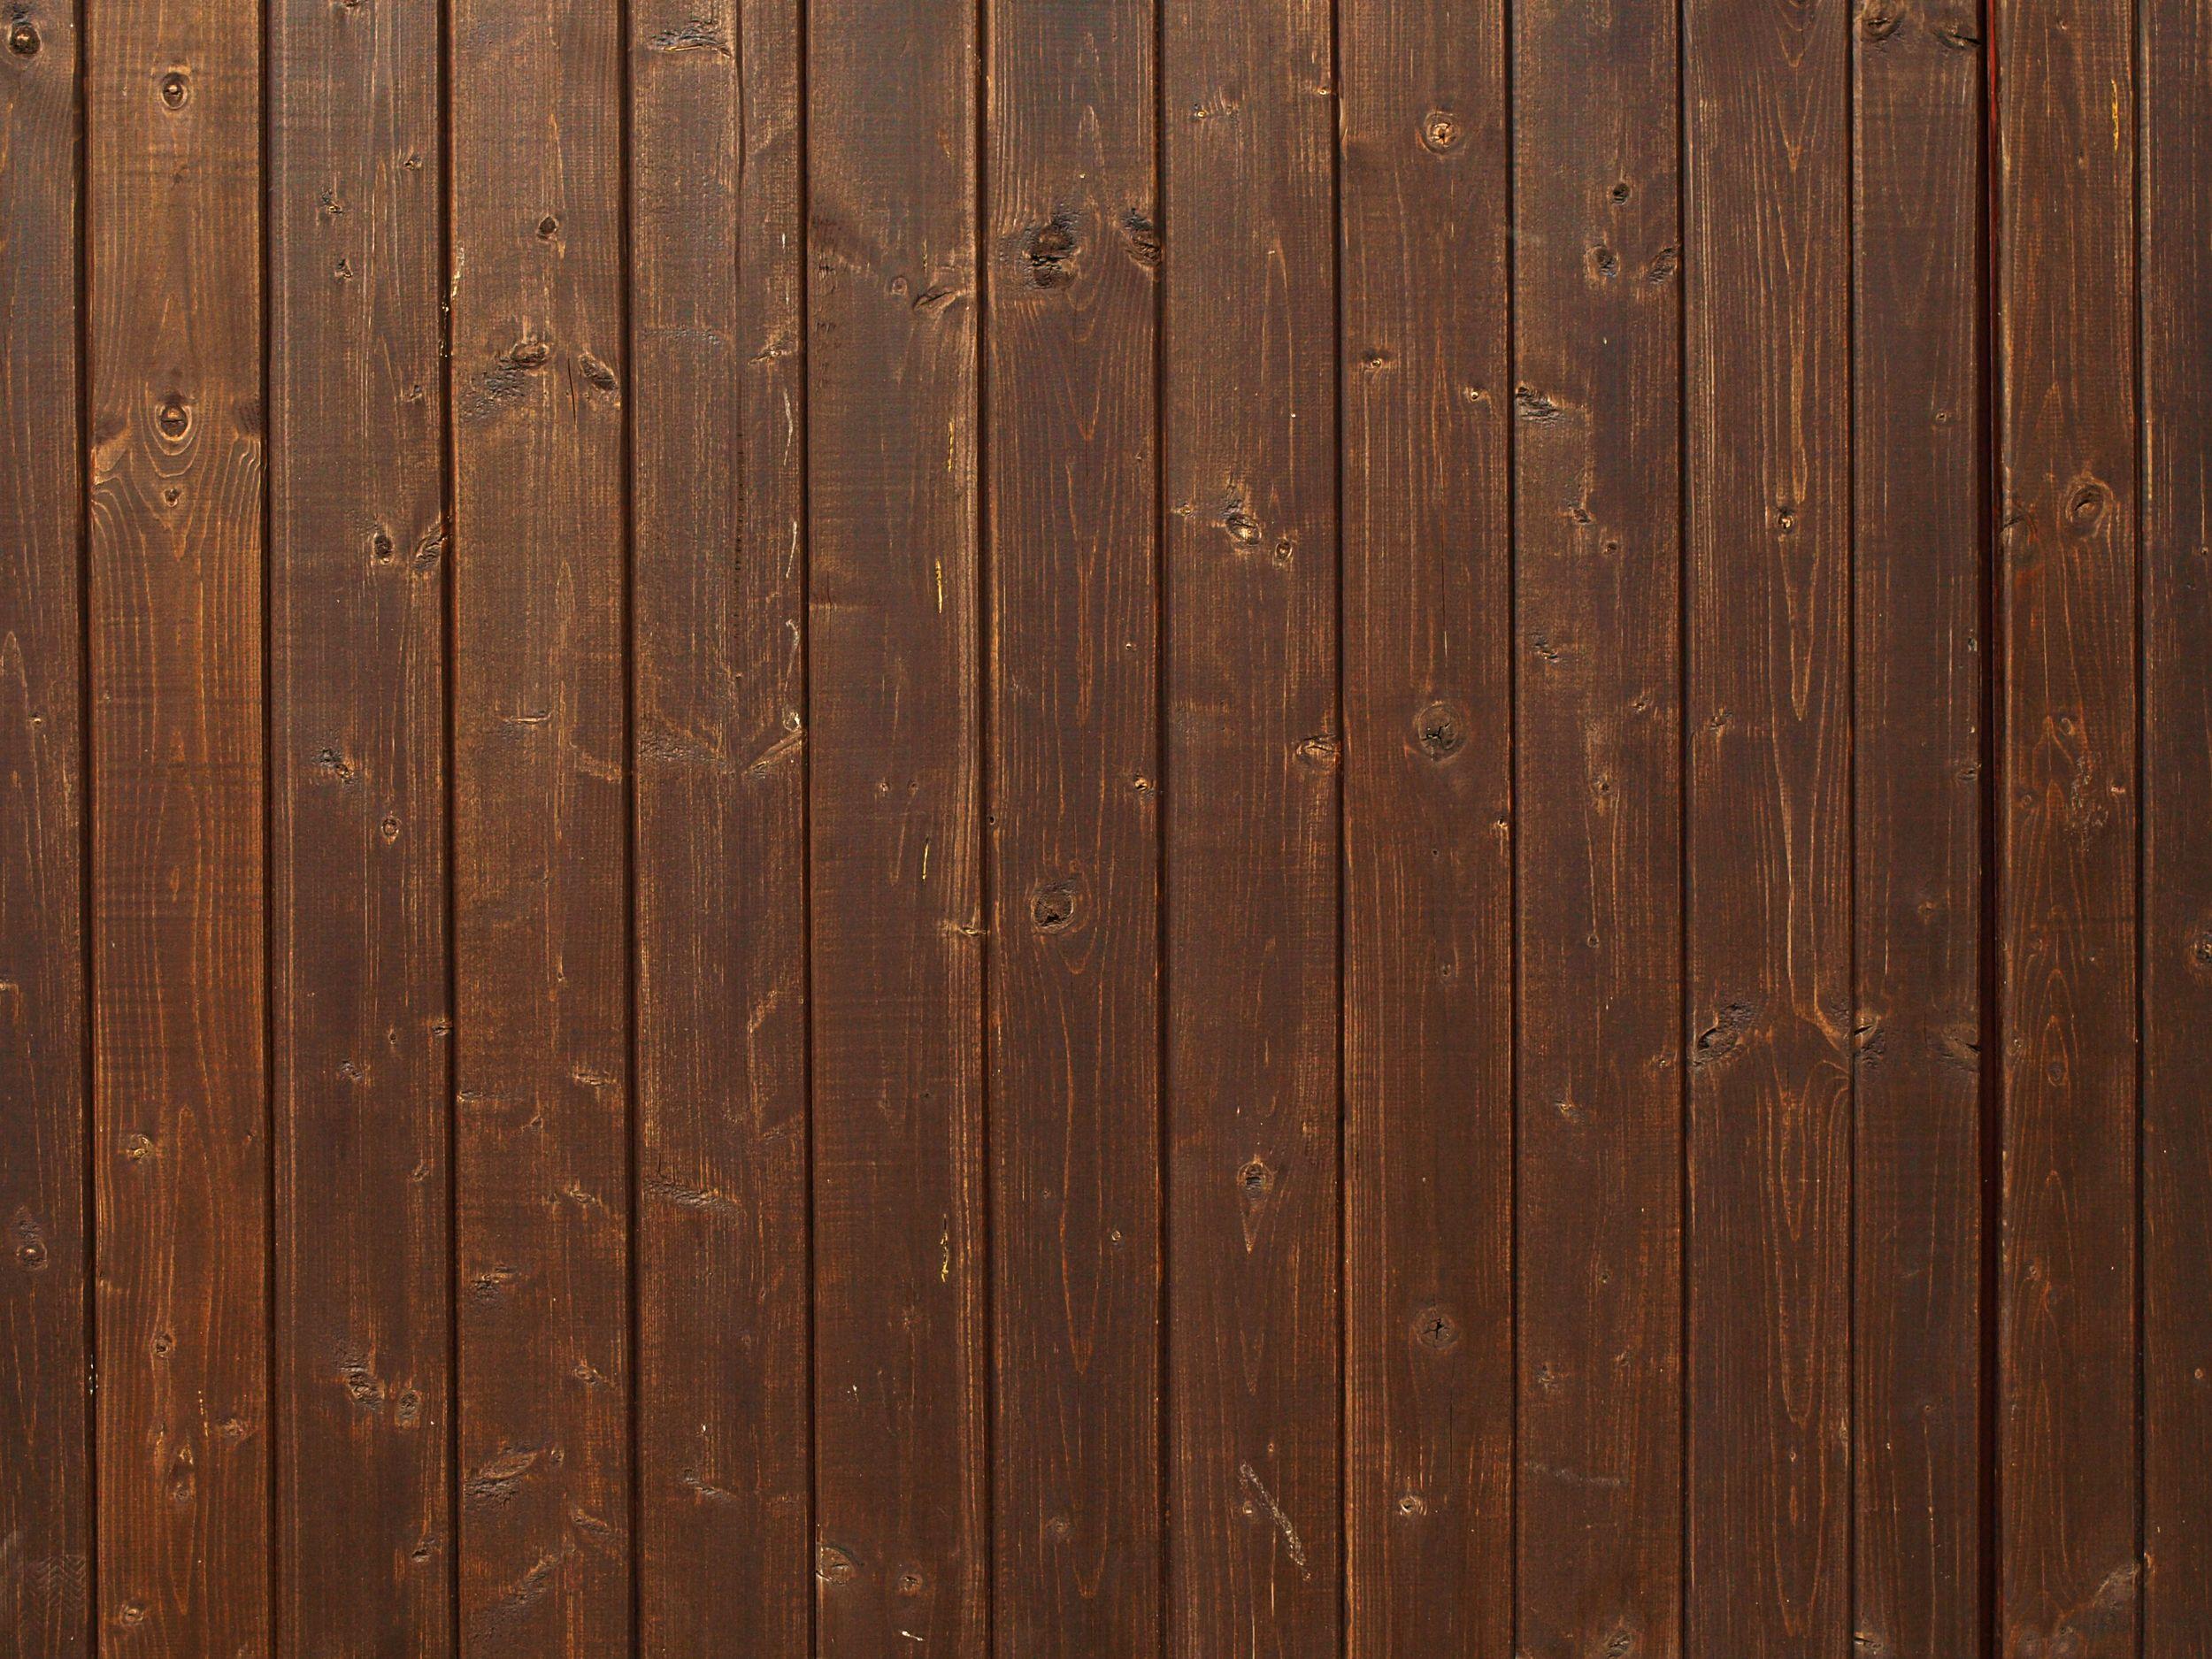 Wallpaper, door, wood, texture, fence, backboard, wooden, pattern